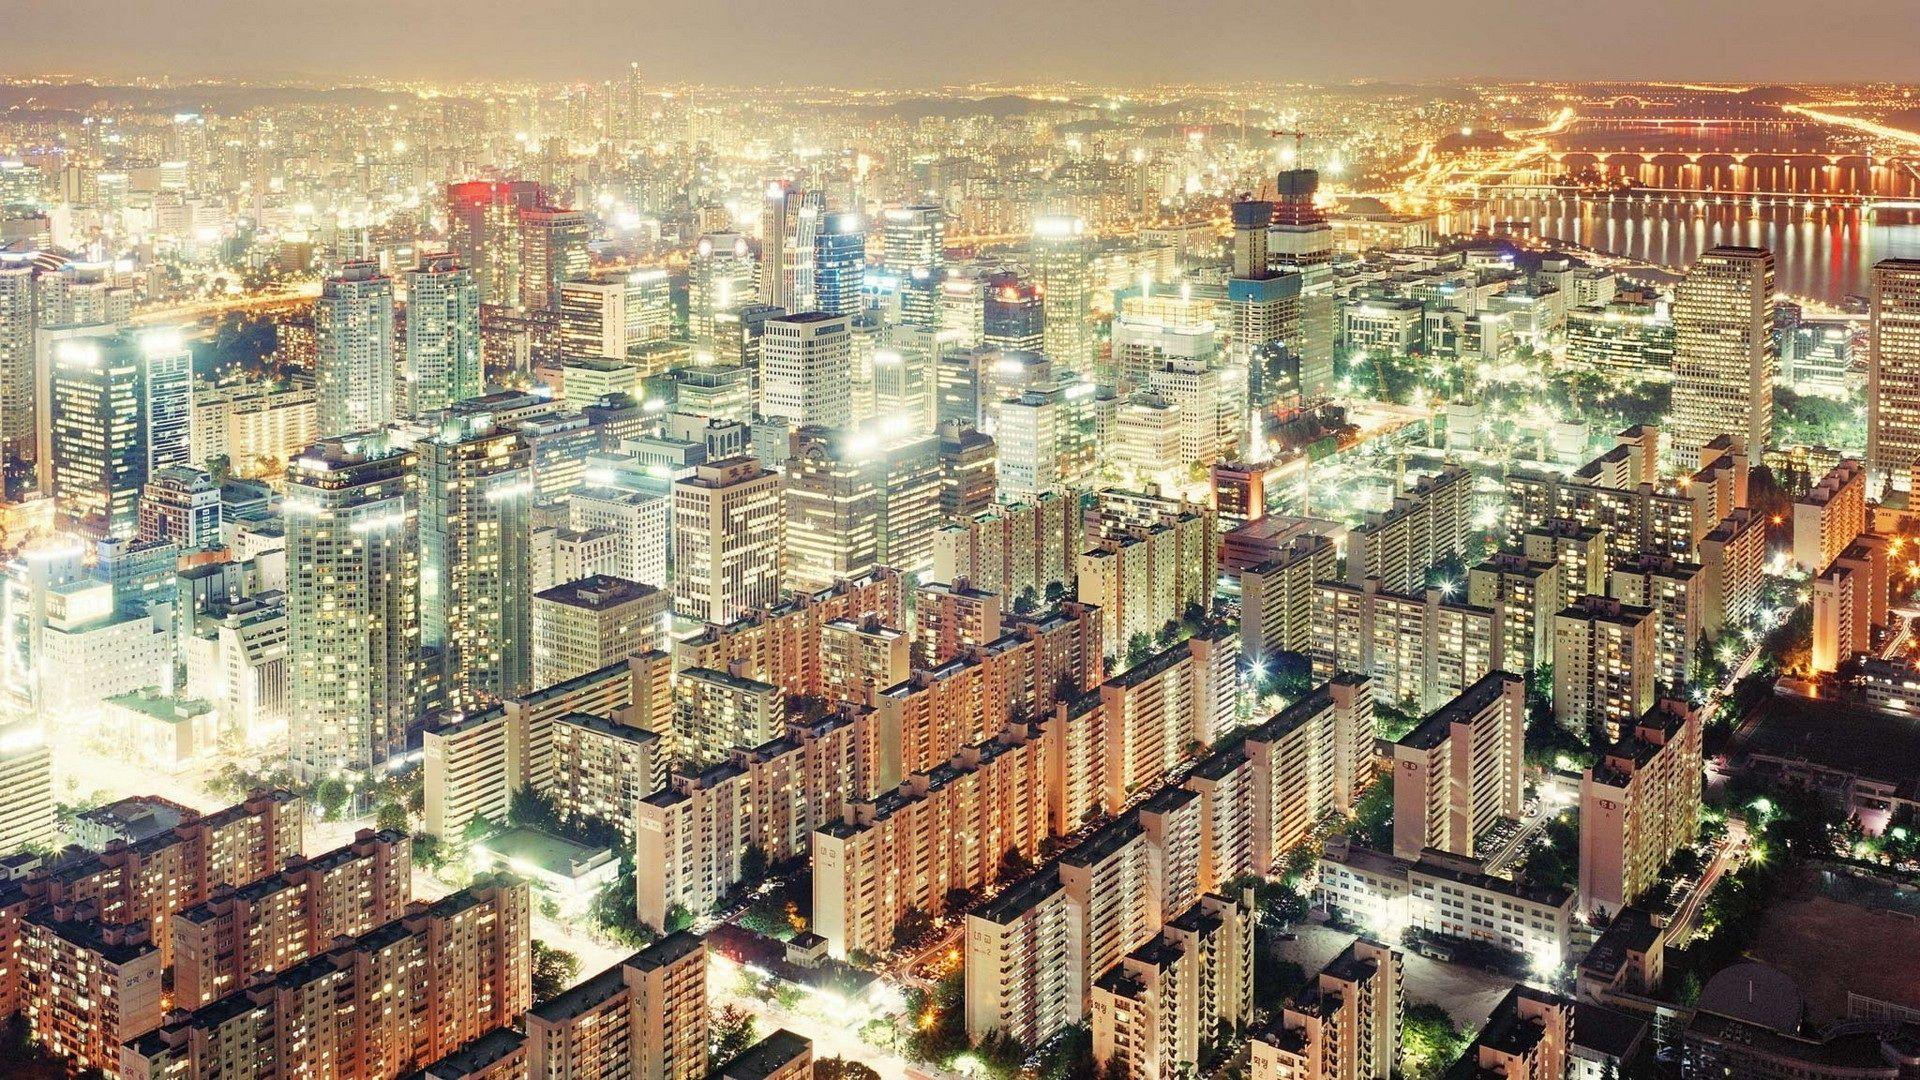 Night View of Seoul, South Korea